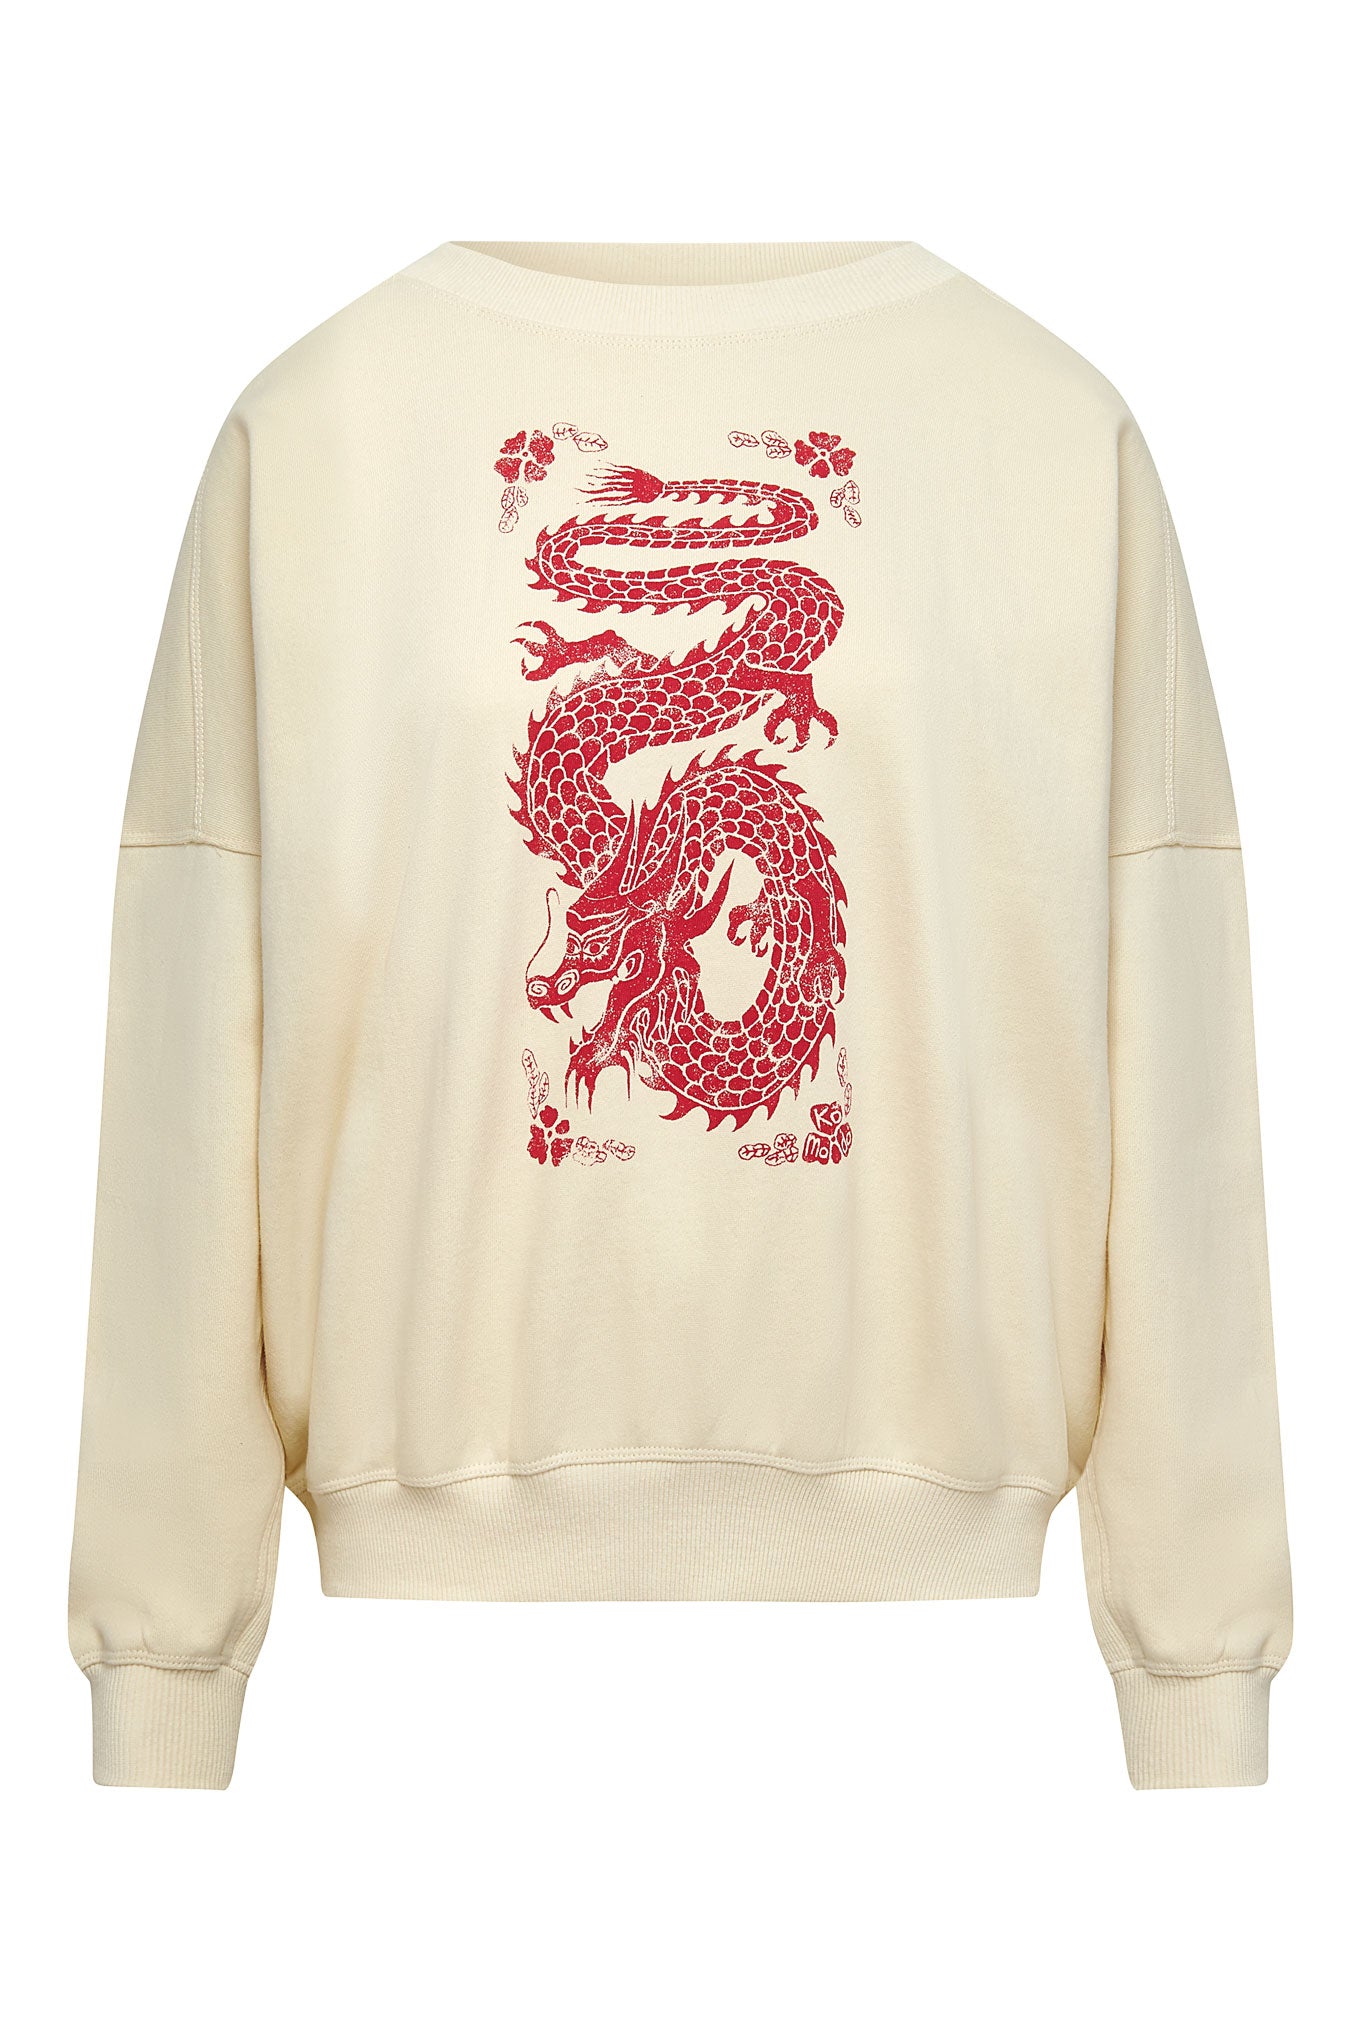 DRAGON - Organic Cotton Print Sweatshirt